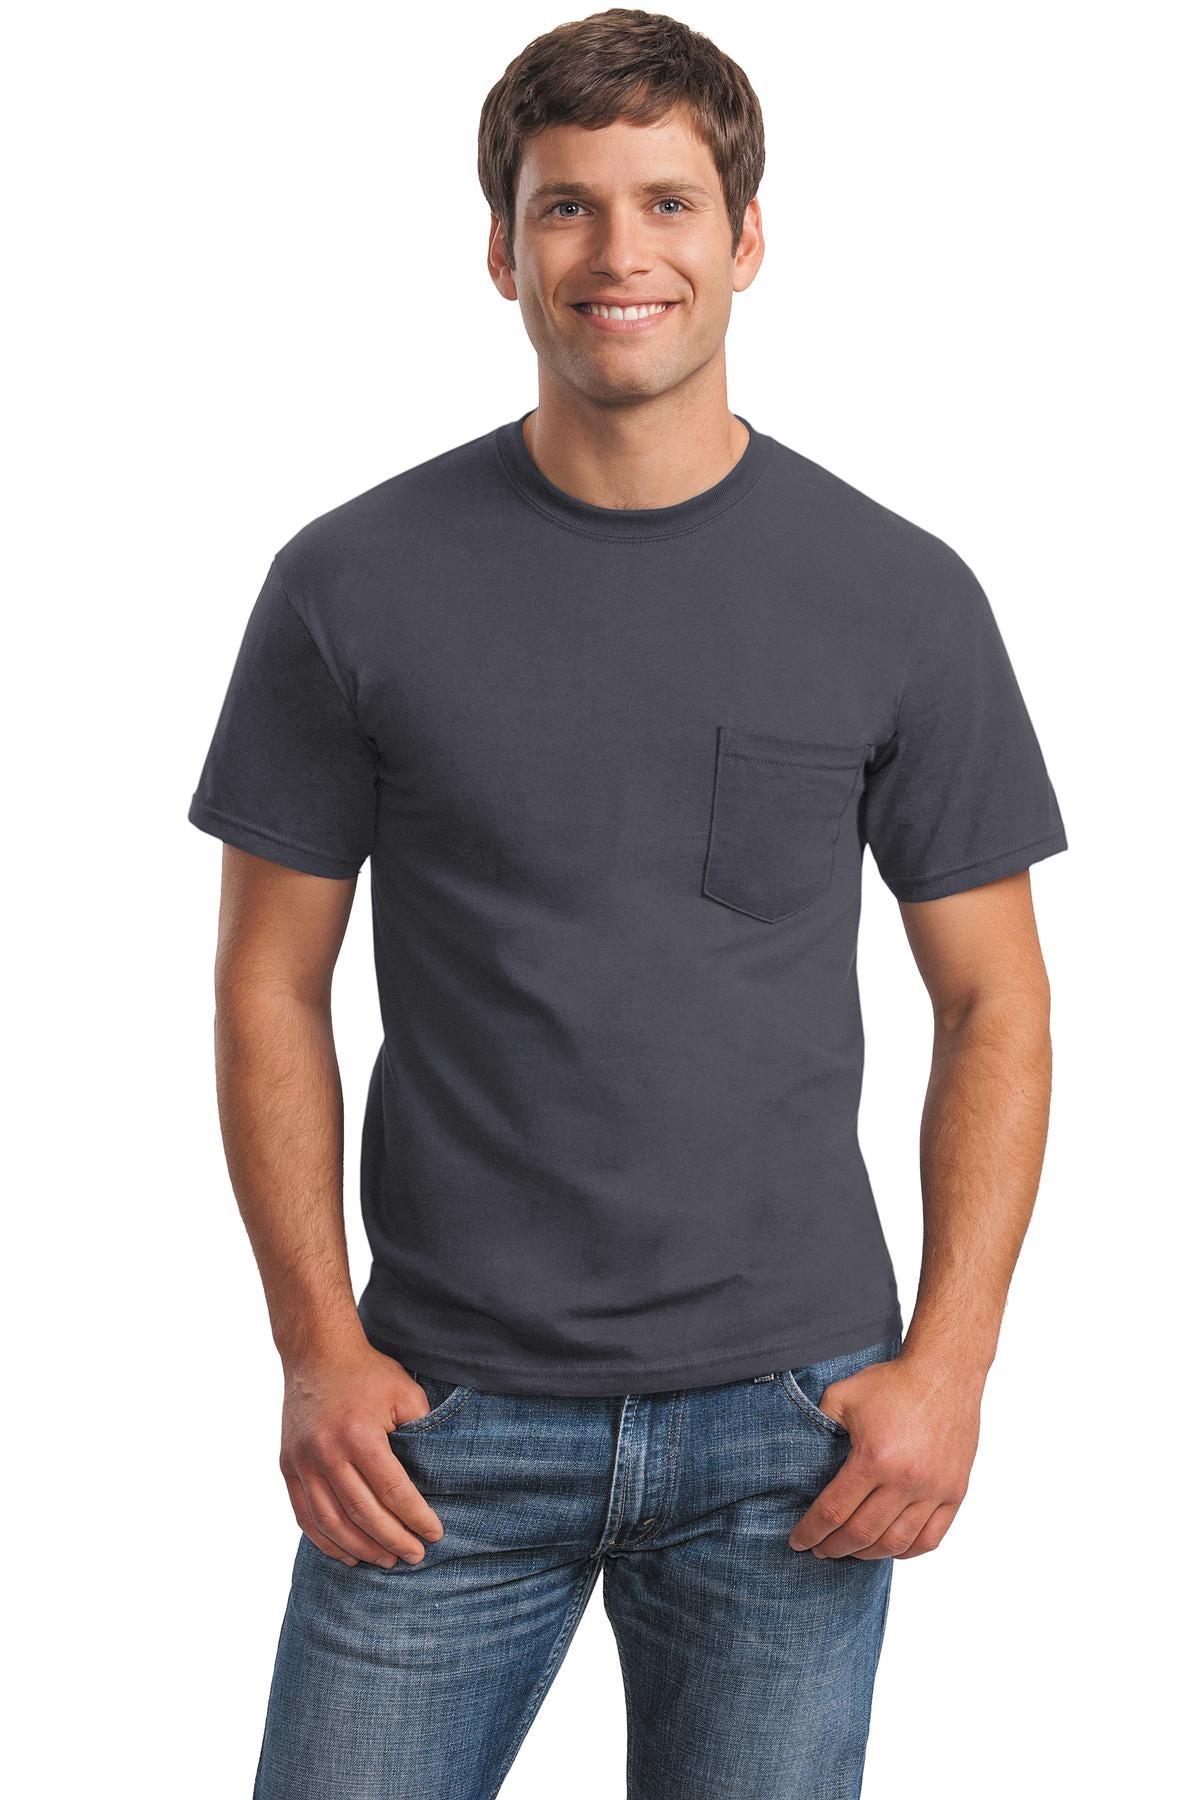 Gildan® - Ultra Cotton® 100% US Cotton T-Shirt with Pocket. 2300 [Charcoal] - DFW Impression